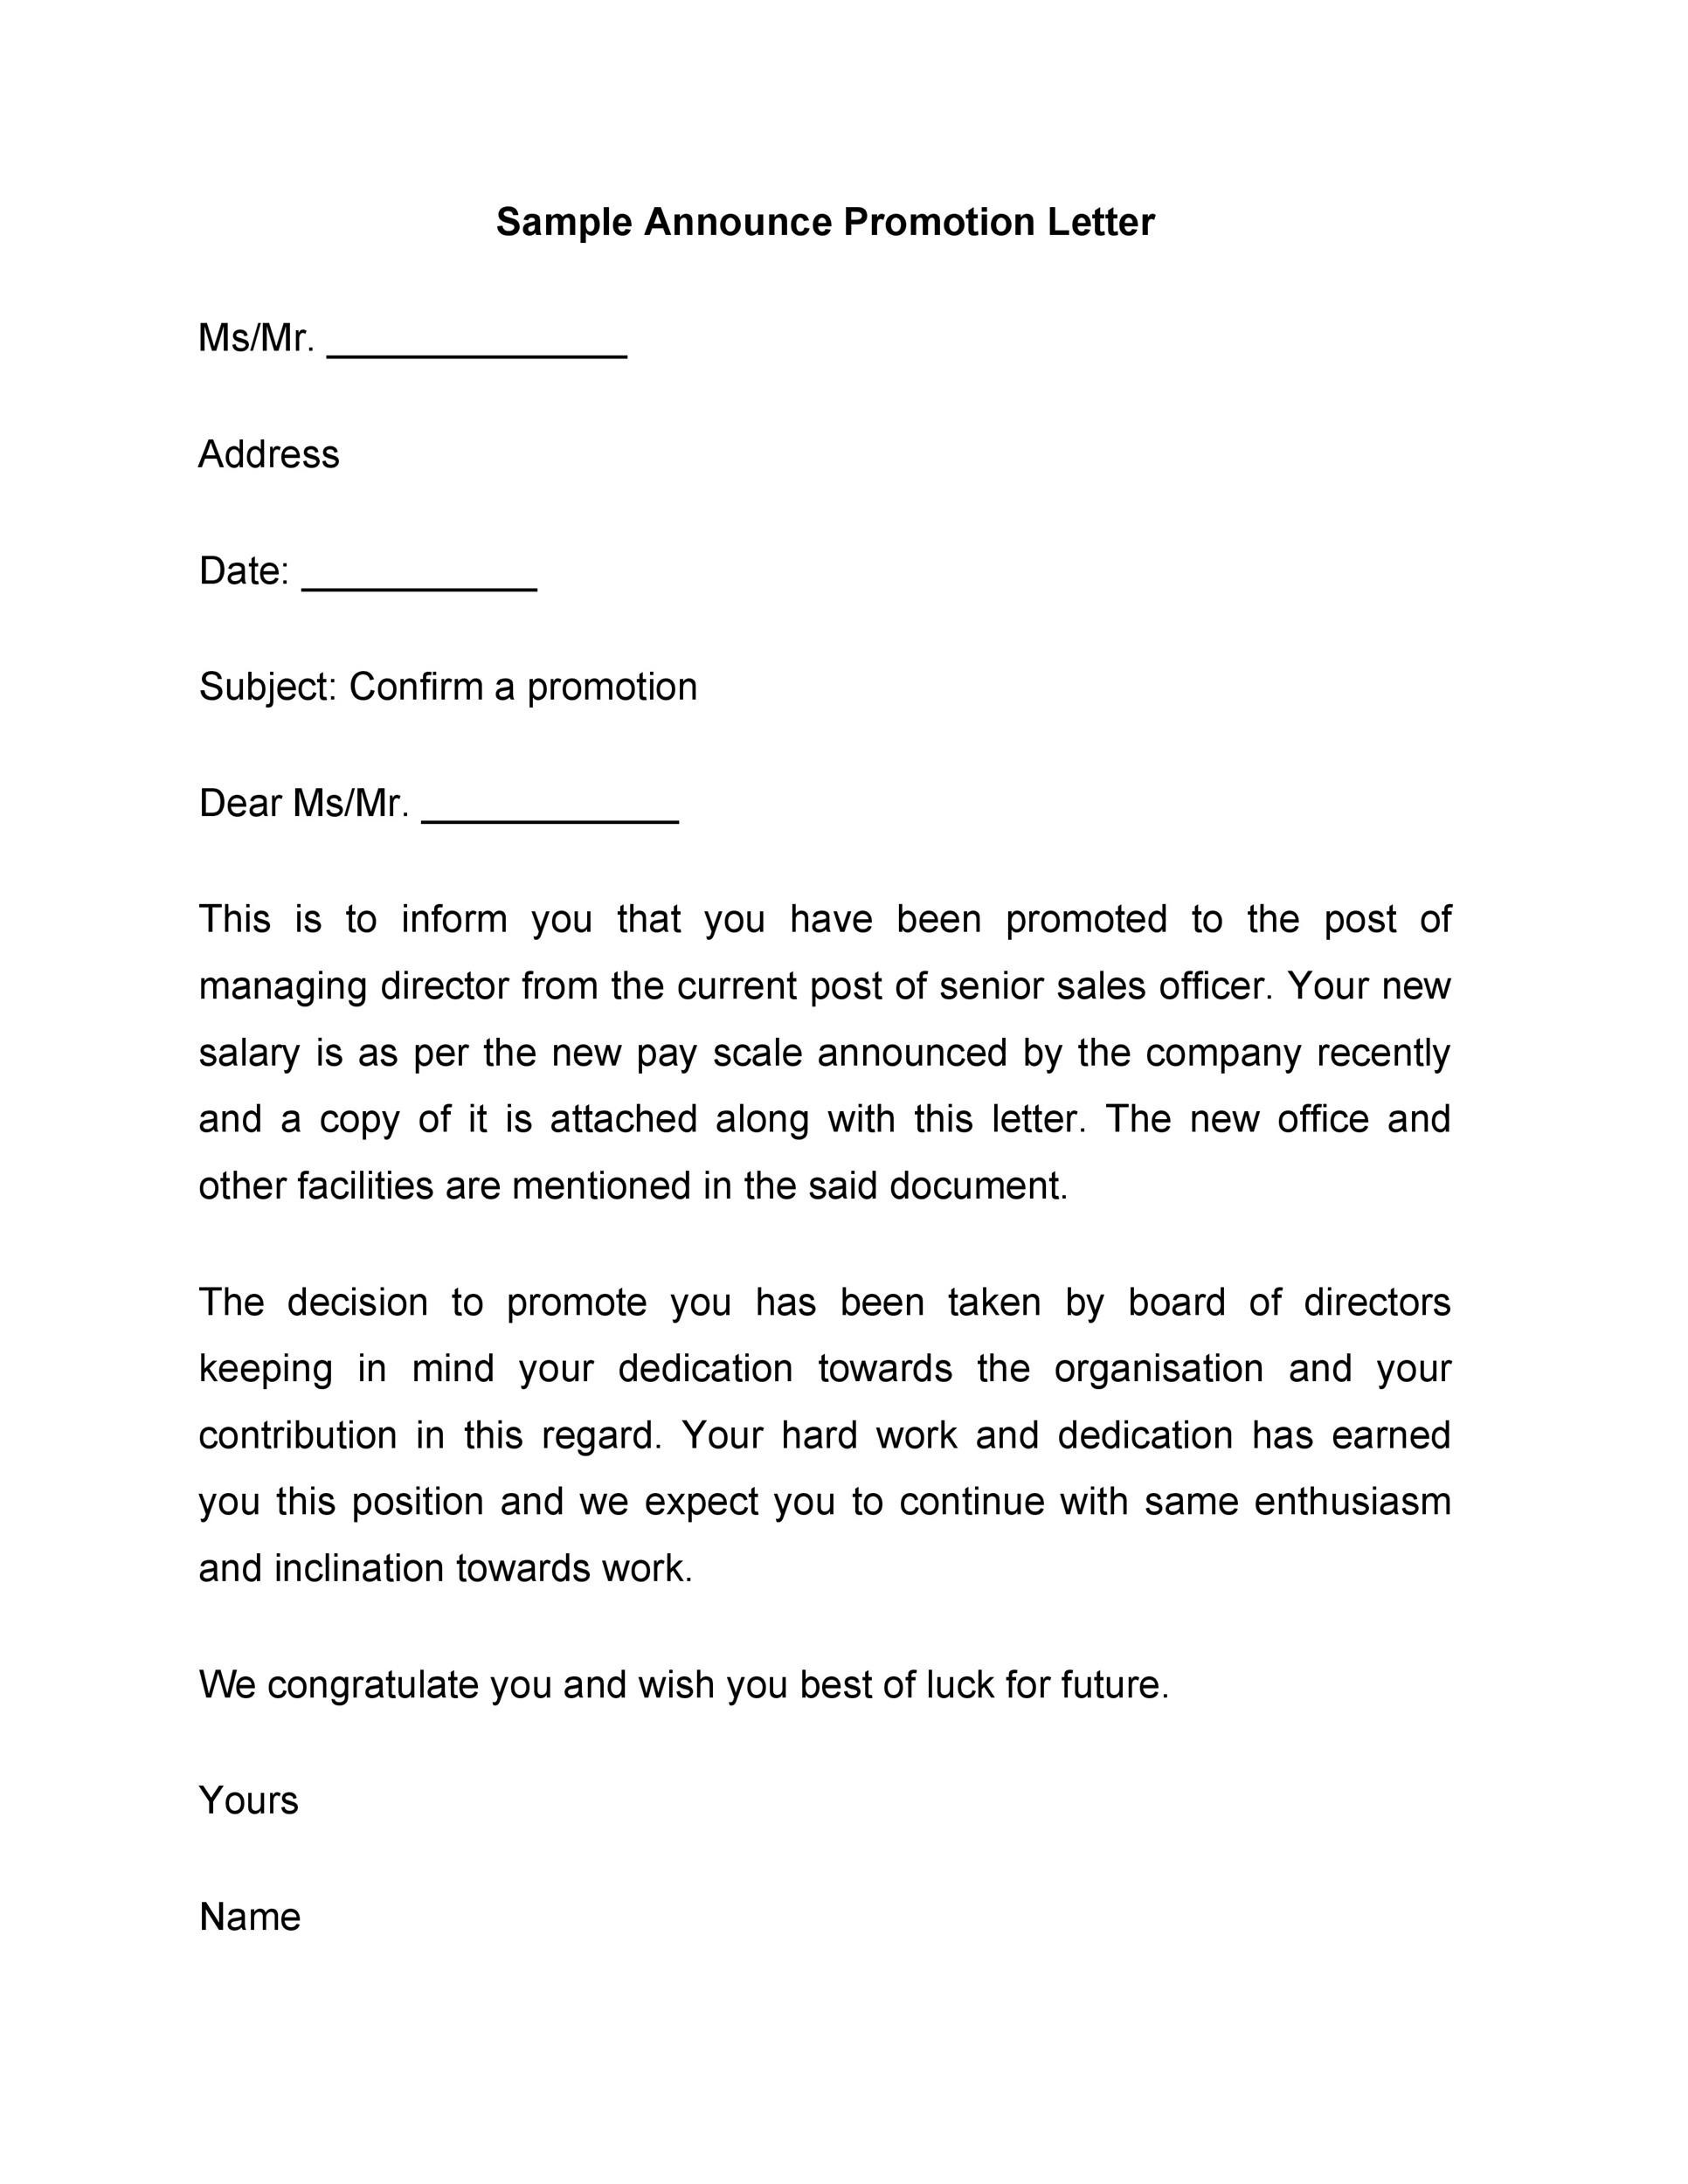 sample of application letter for promotion in ges